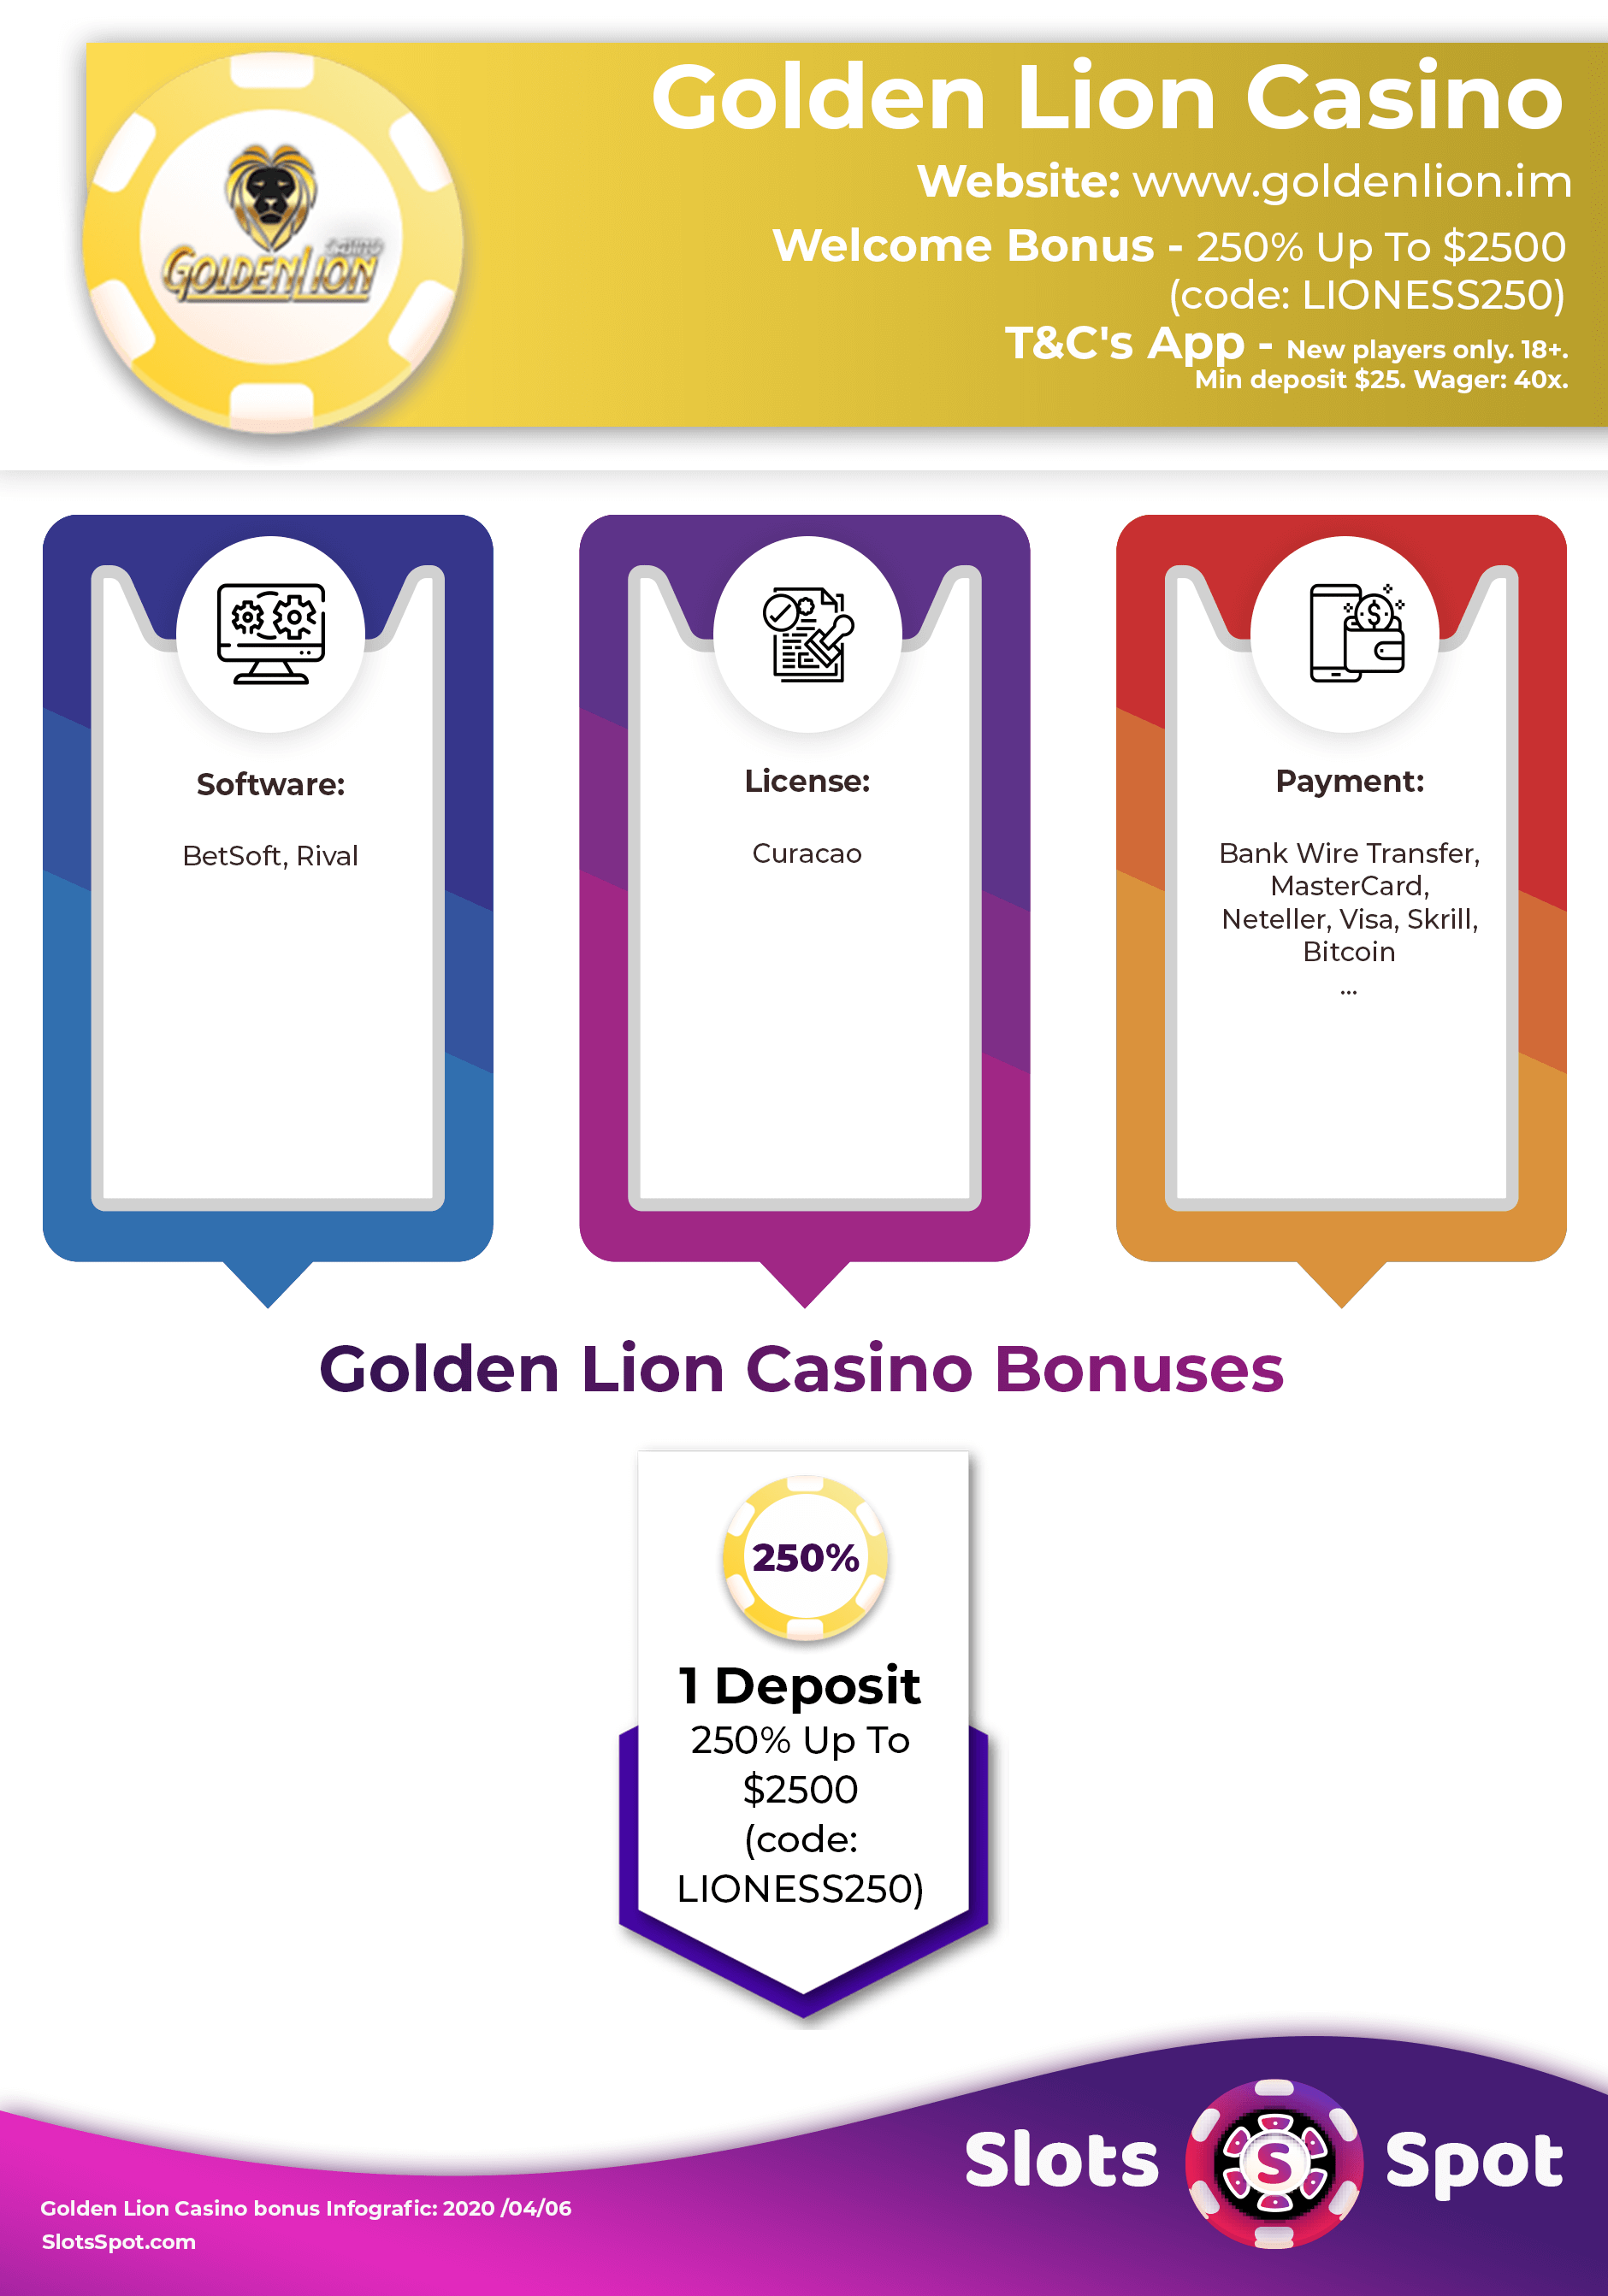 Golden lion operations